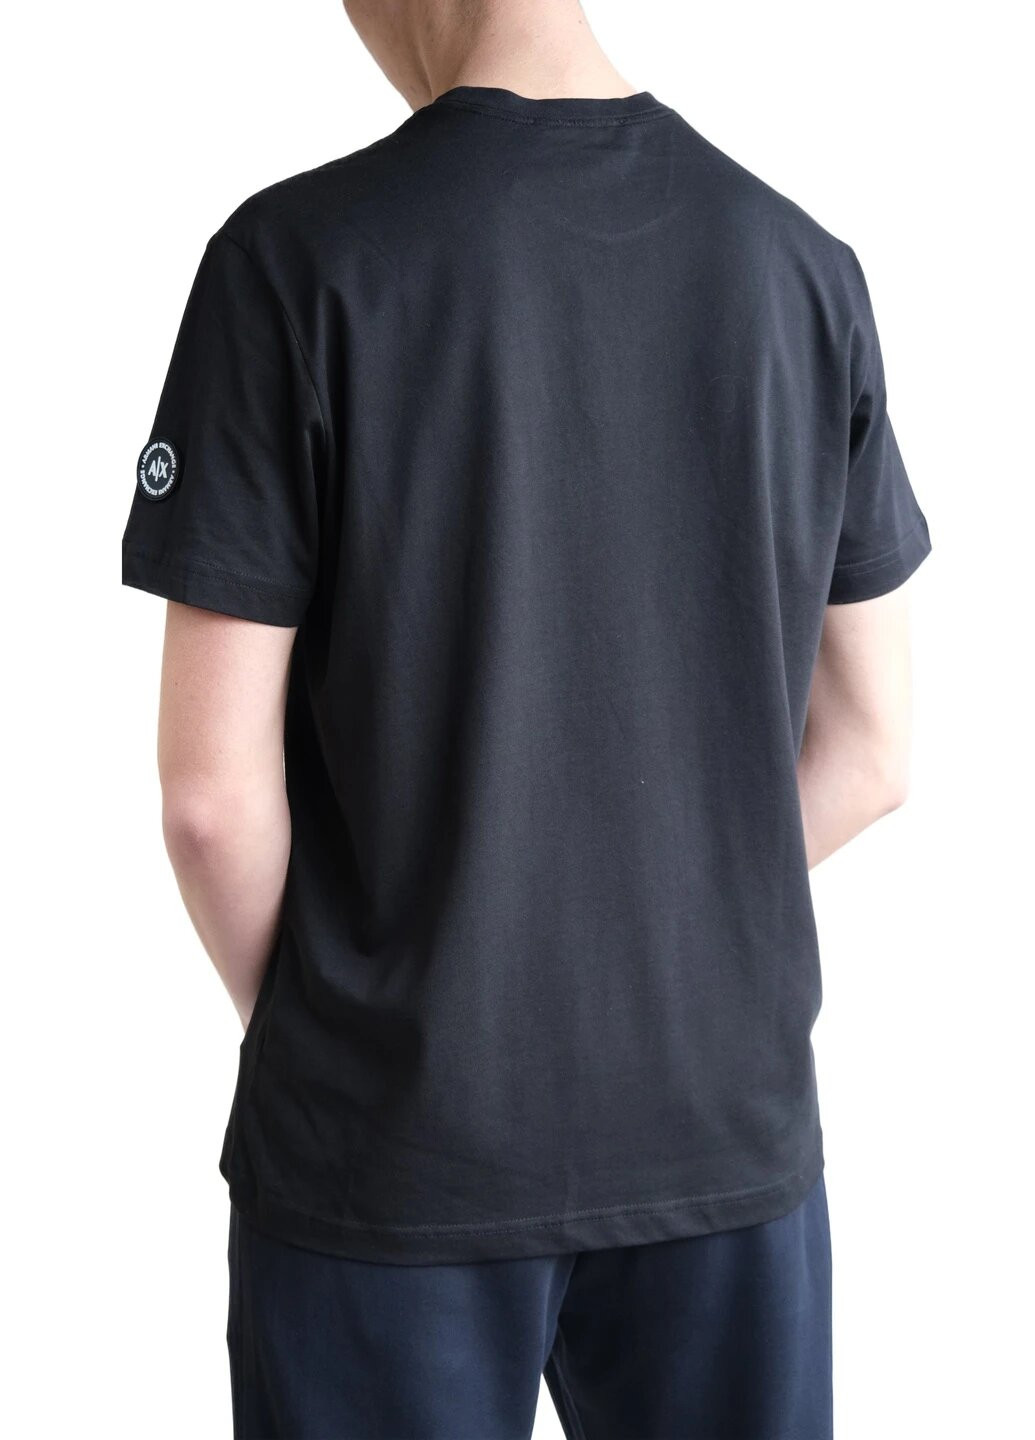 Черная футболка мужская с коротким рукавом Armani